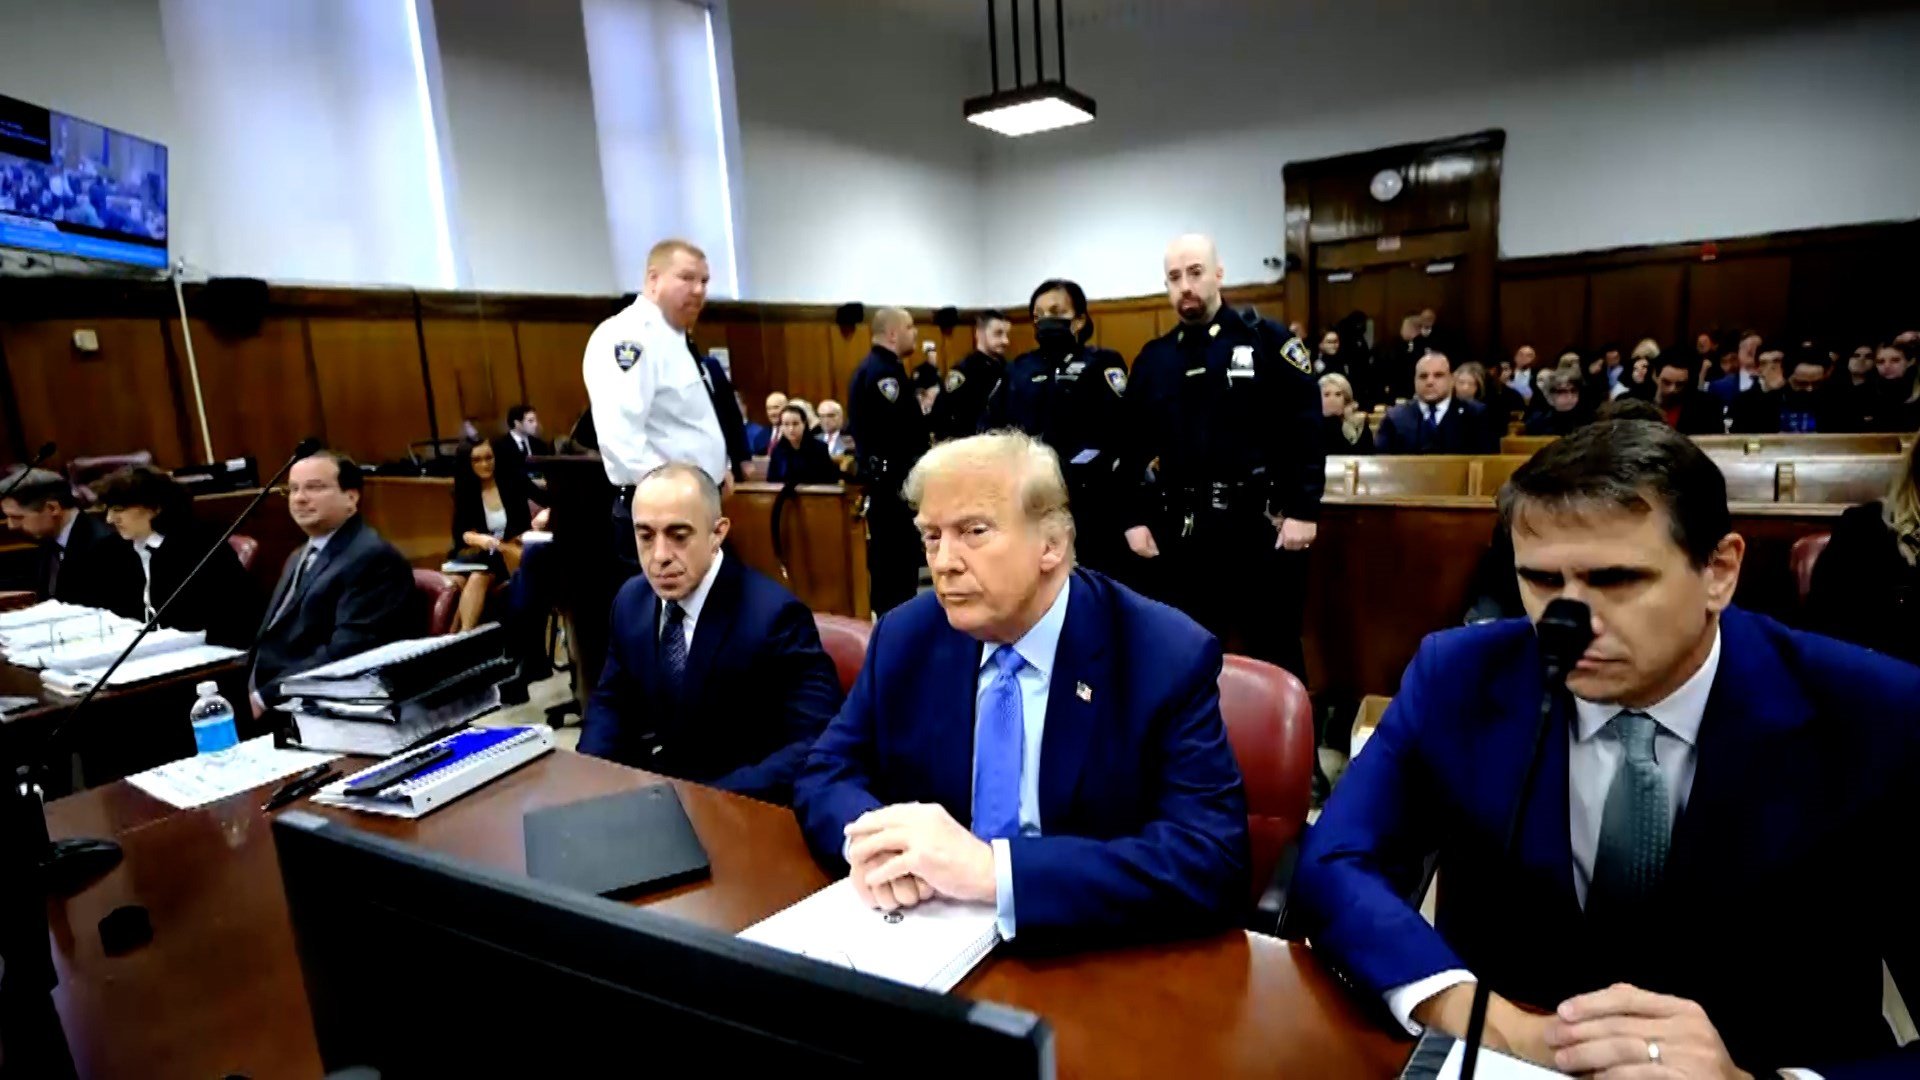 Trump held in criminal contempt in N.Y. hush money trial